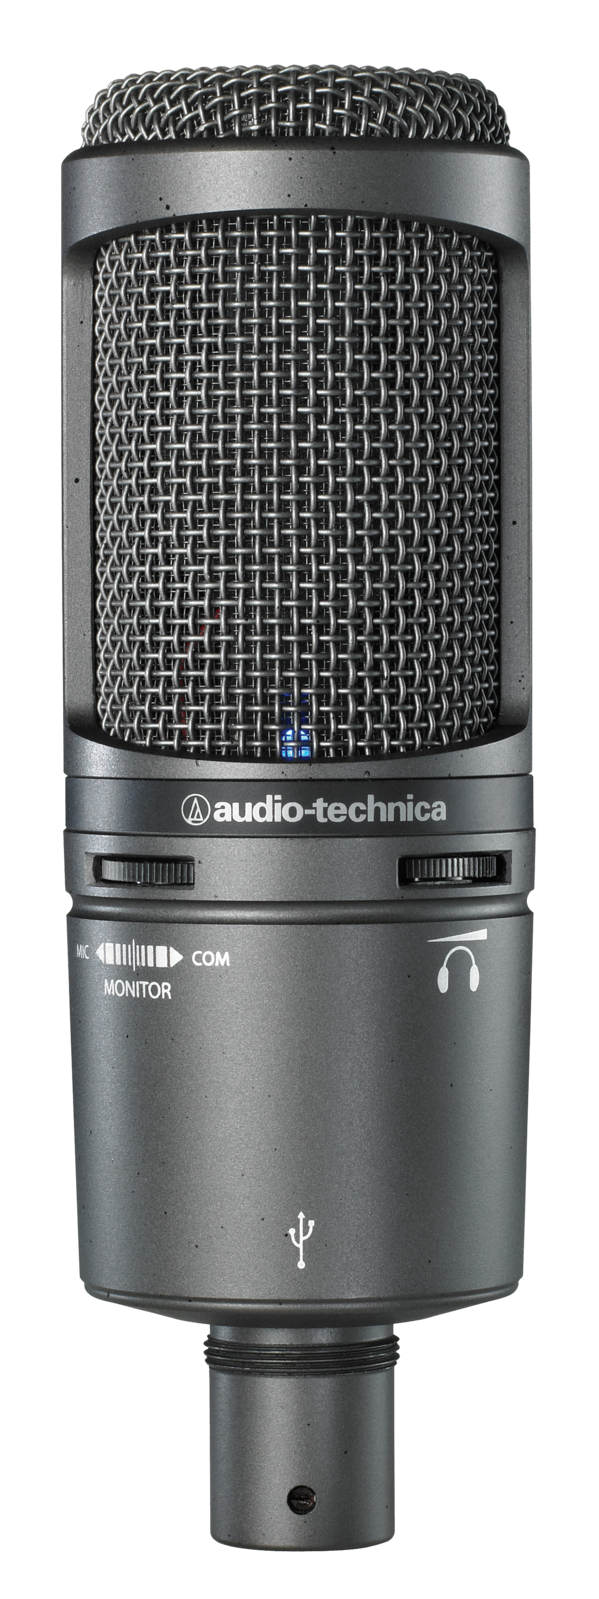 Audio-Technica Creator Pack Pro